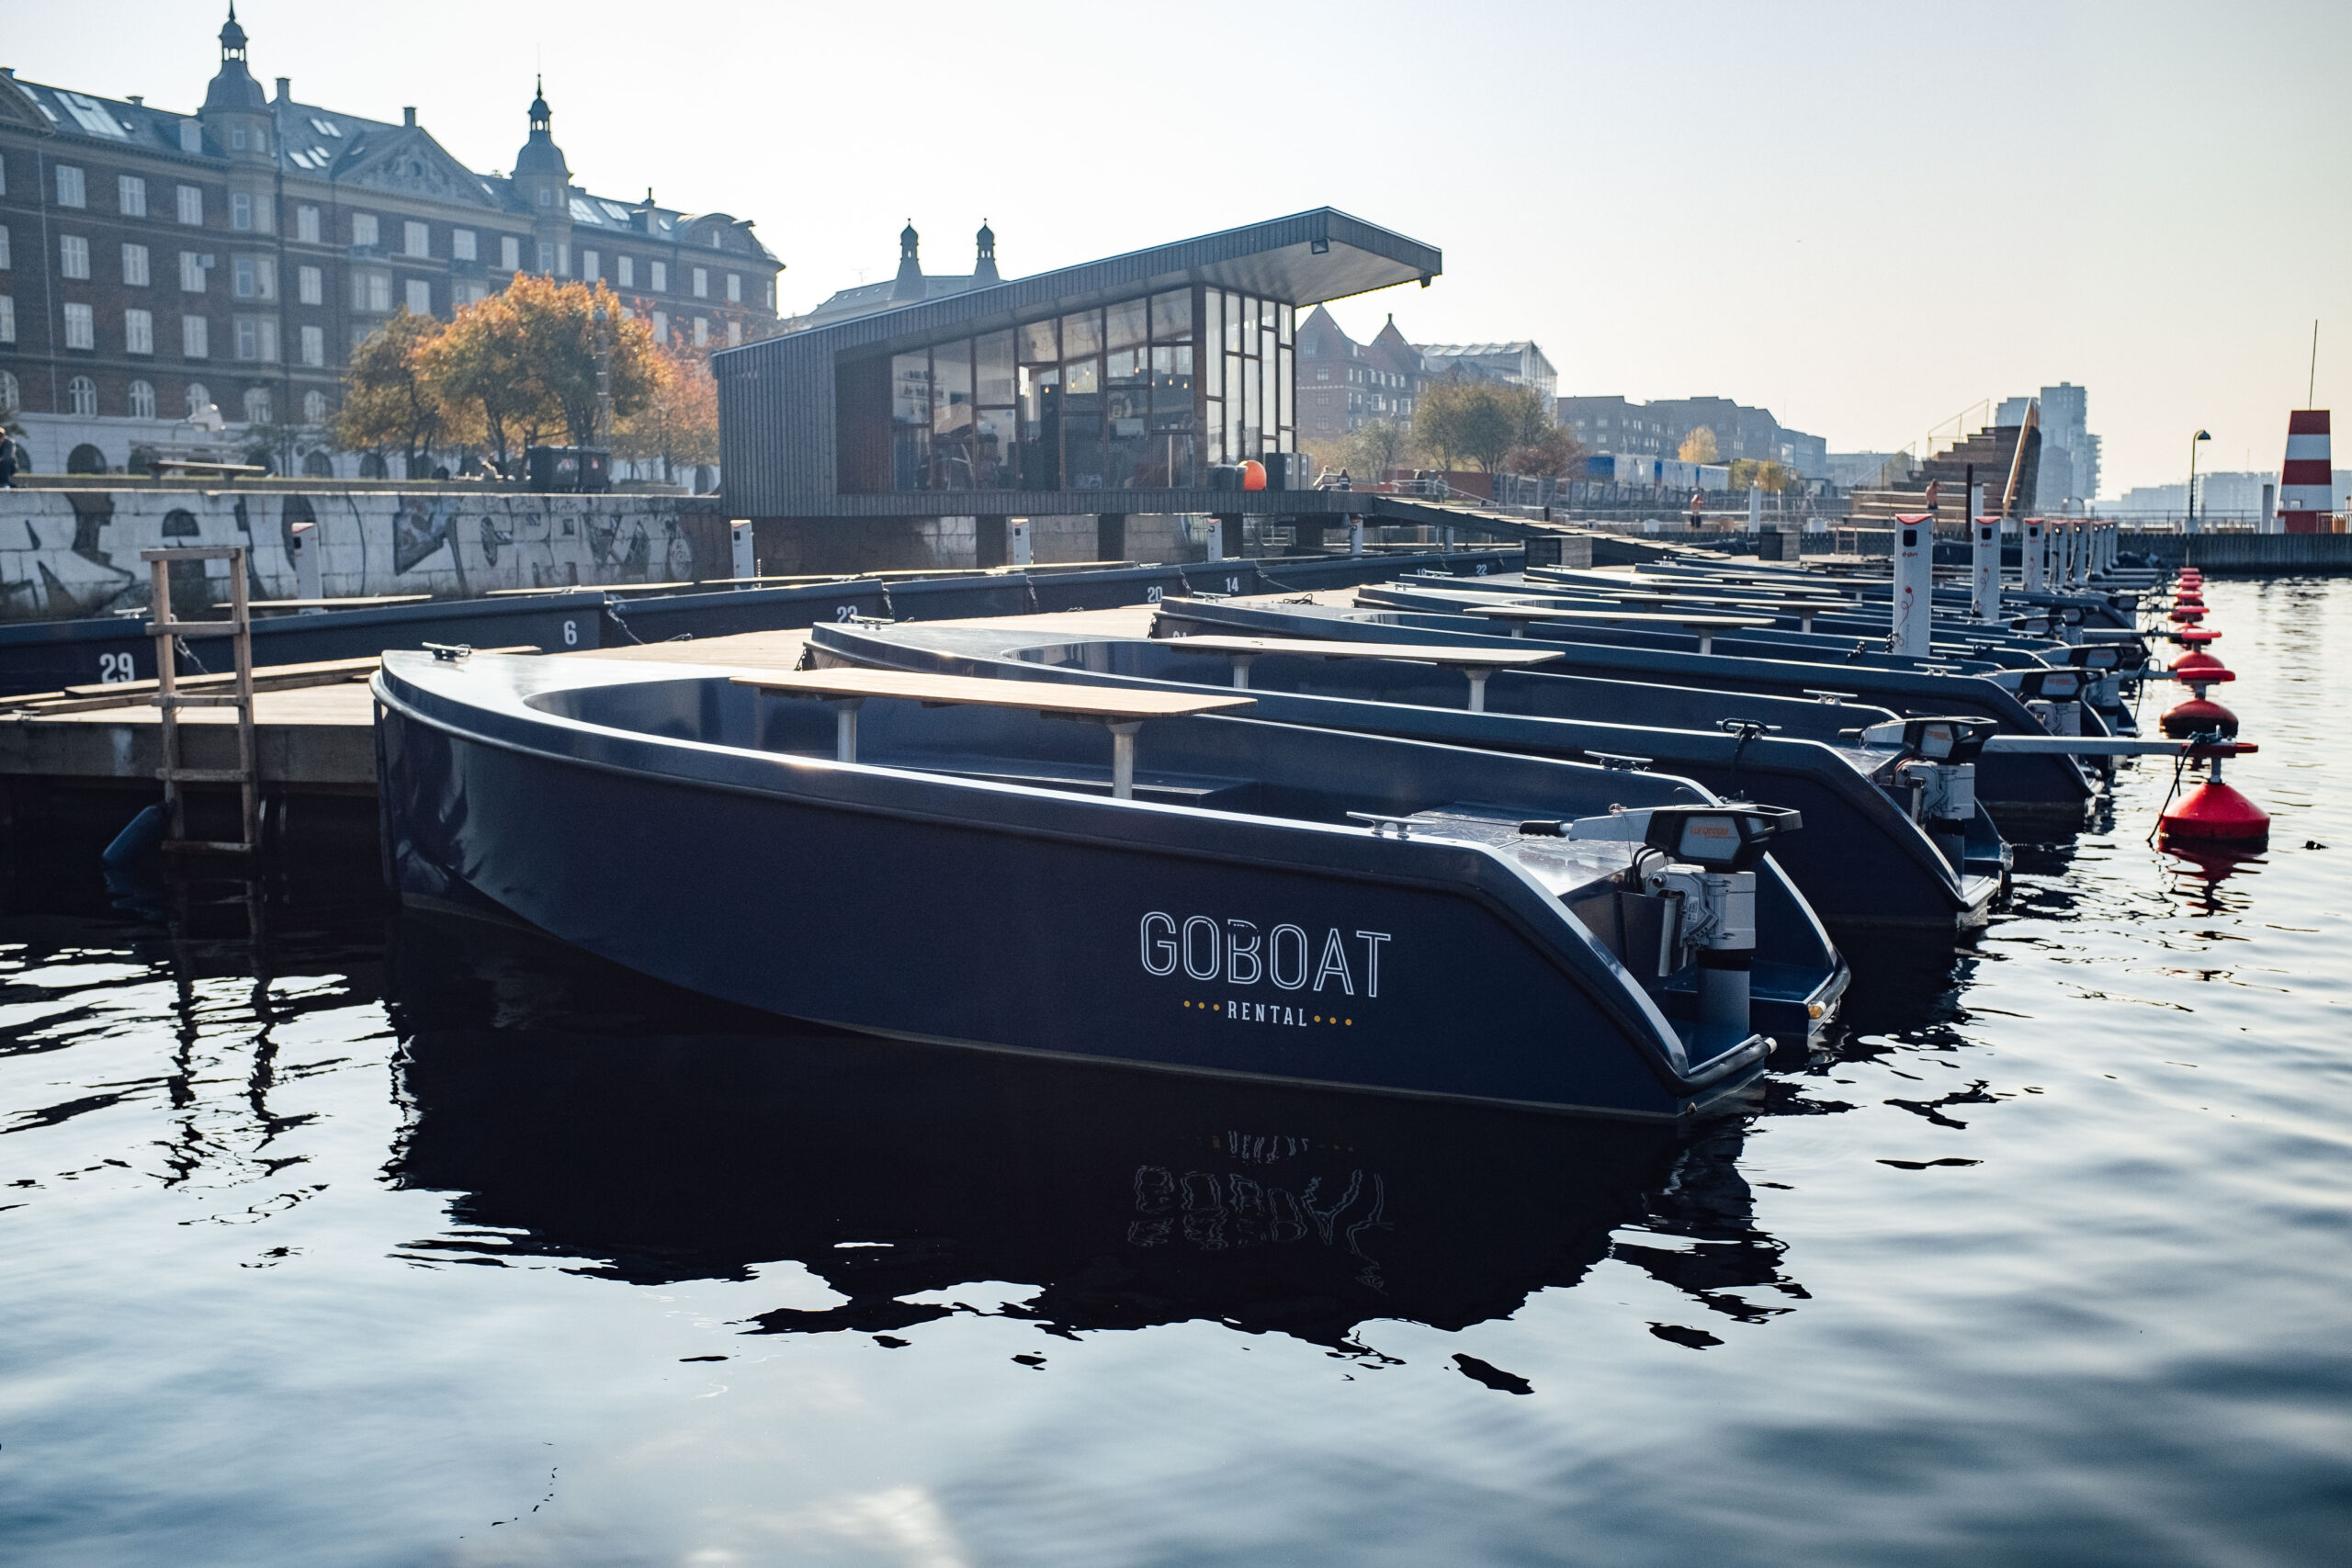 https://goboat-website-production.imgix.net/prod/sites/3/2022/12/13094359/Boat-rental-at-Islands-Brygge-in-Copenhagen-GoBoat-scaled.jpg